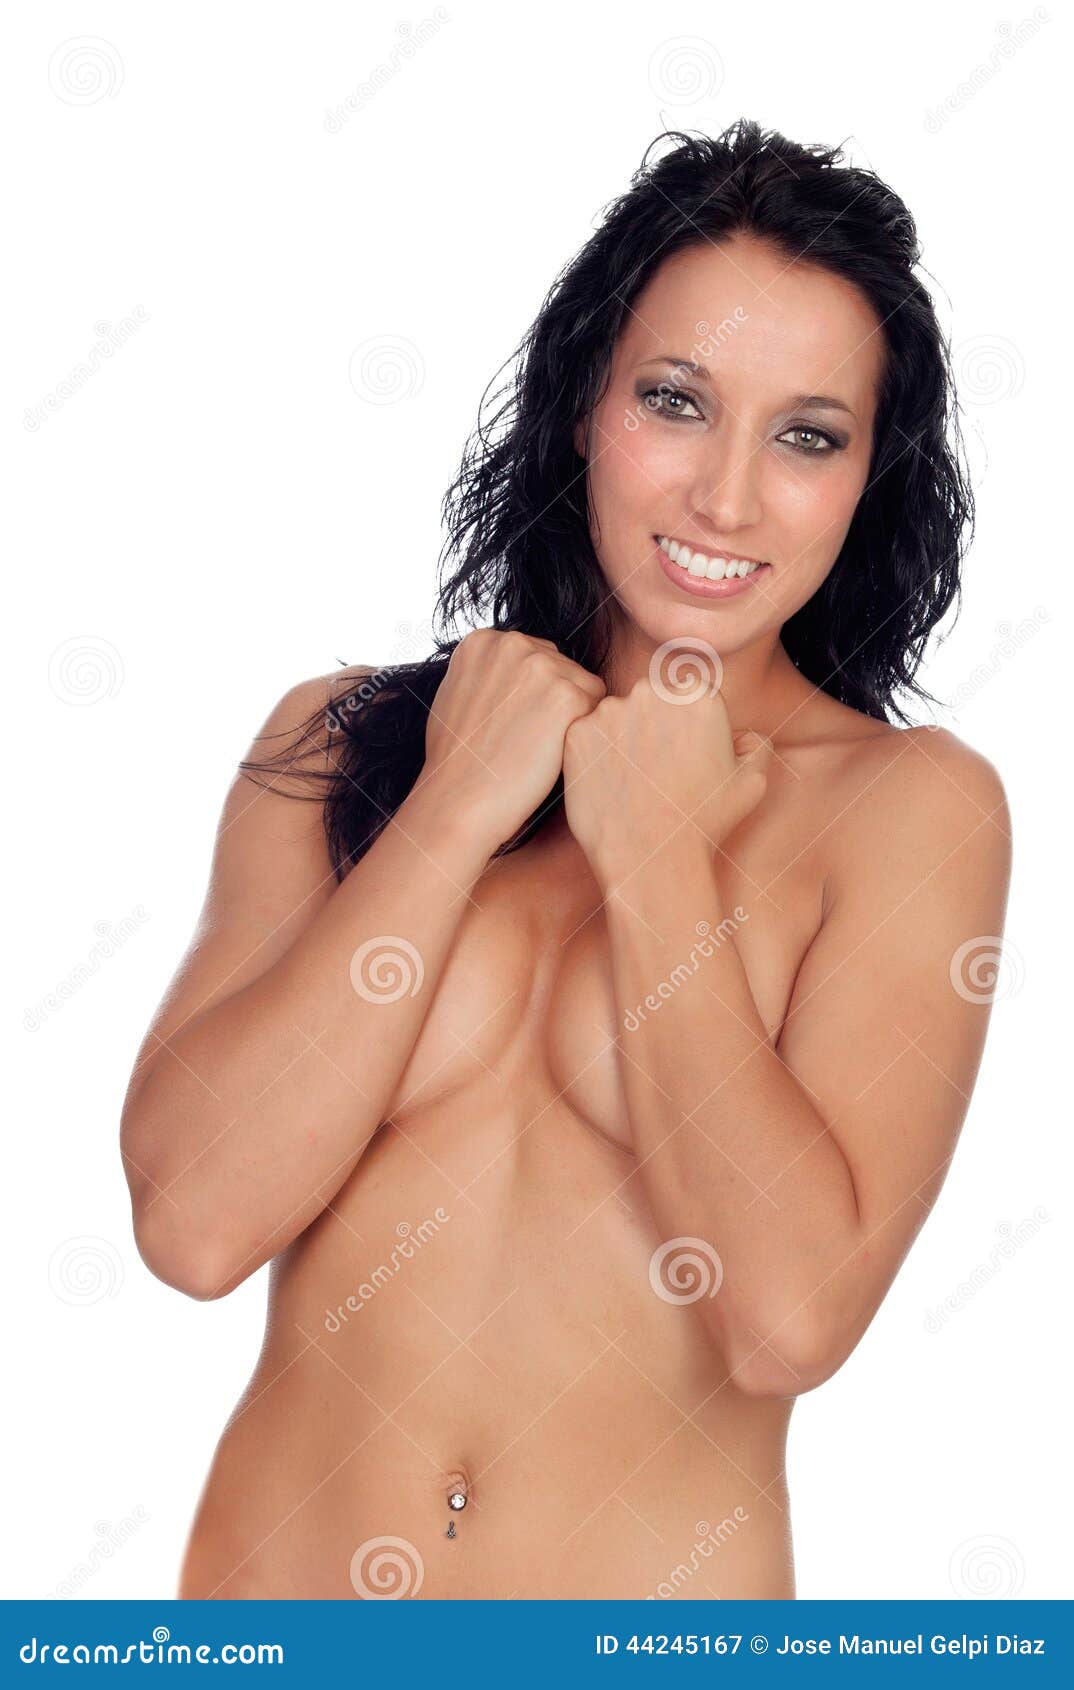 a sperm licking porn babesa